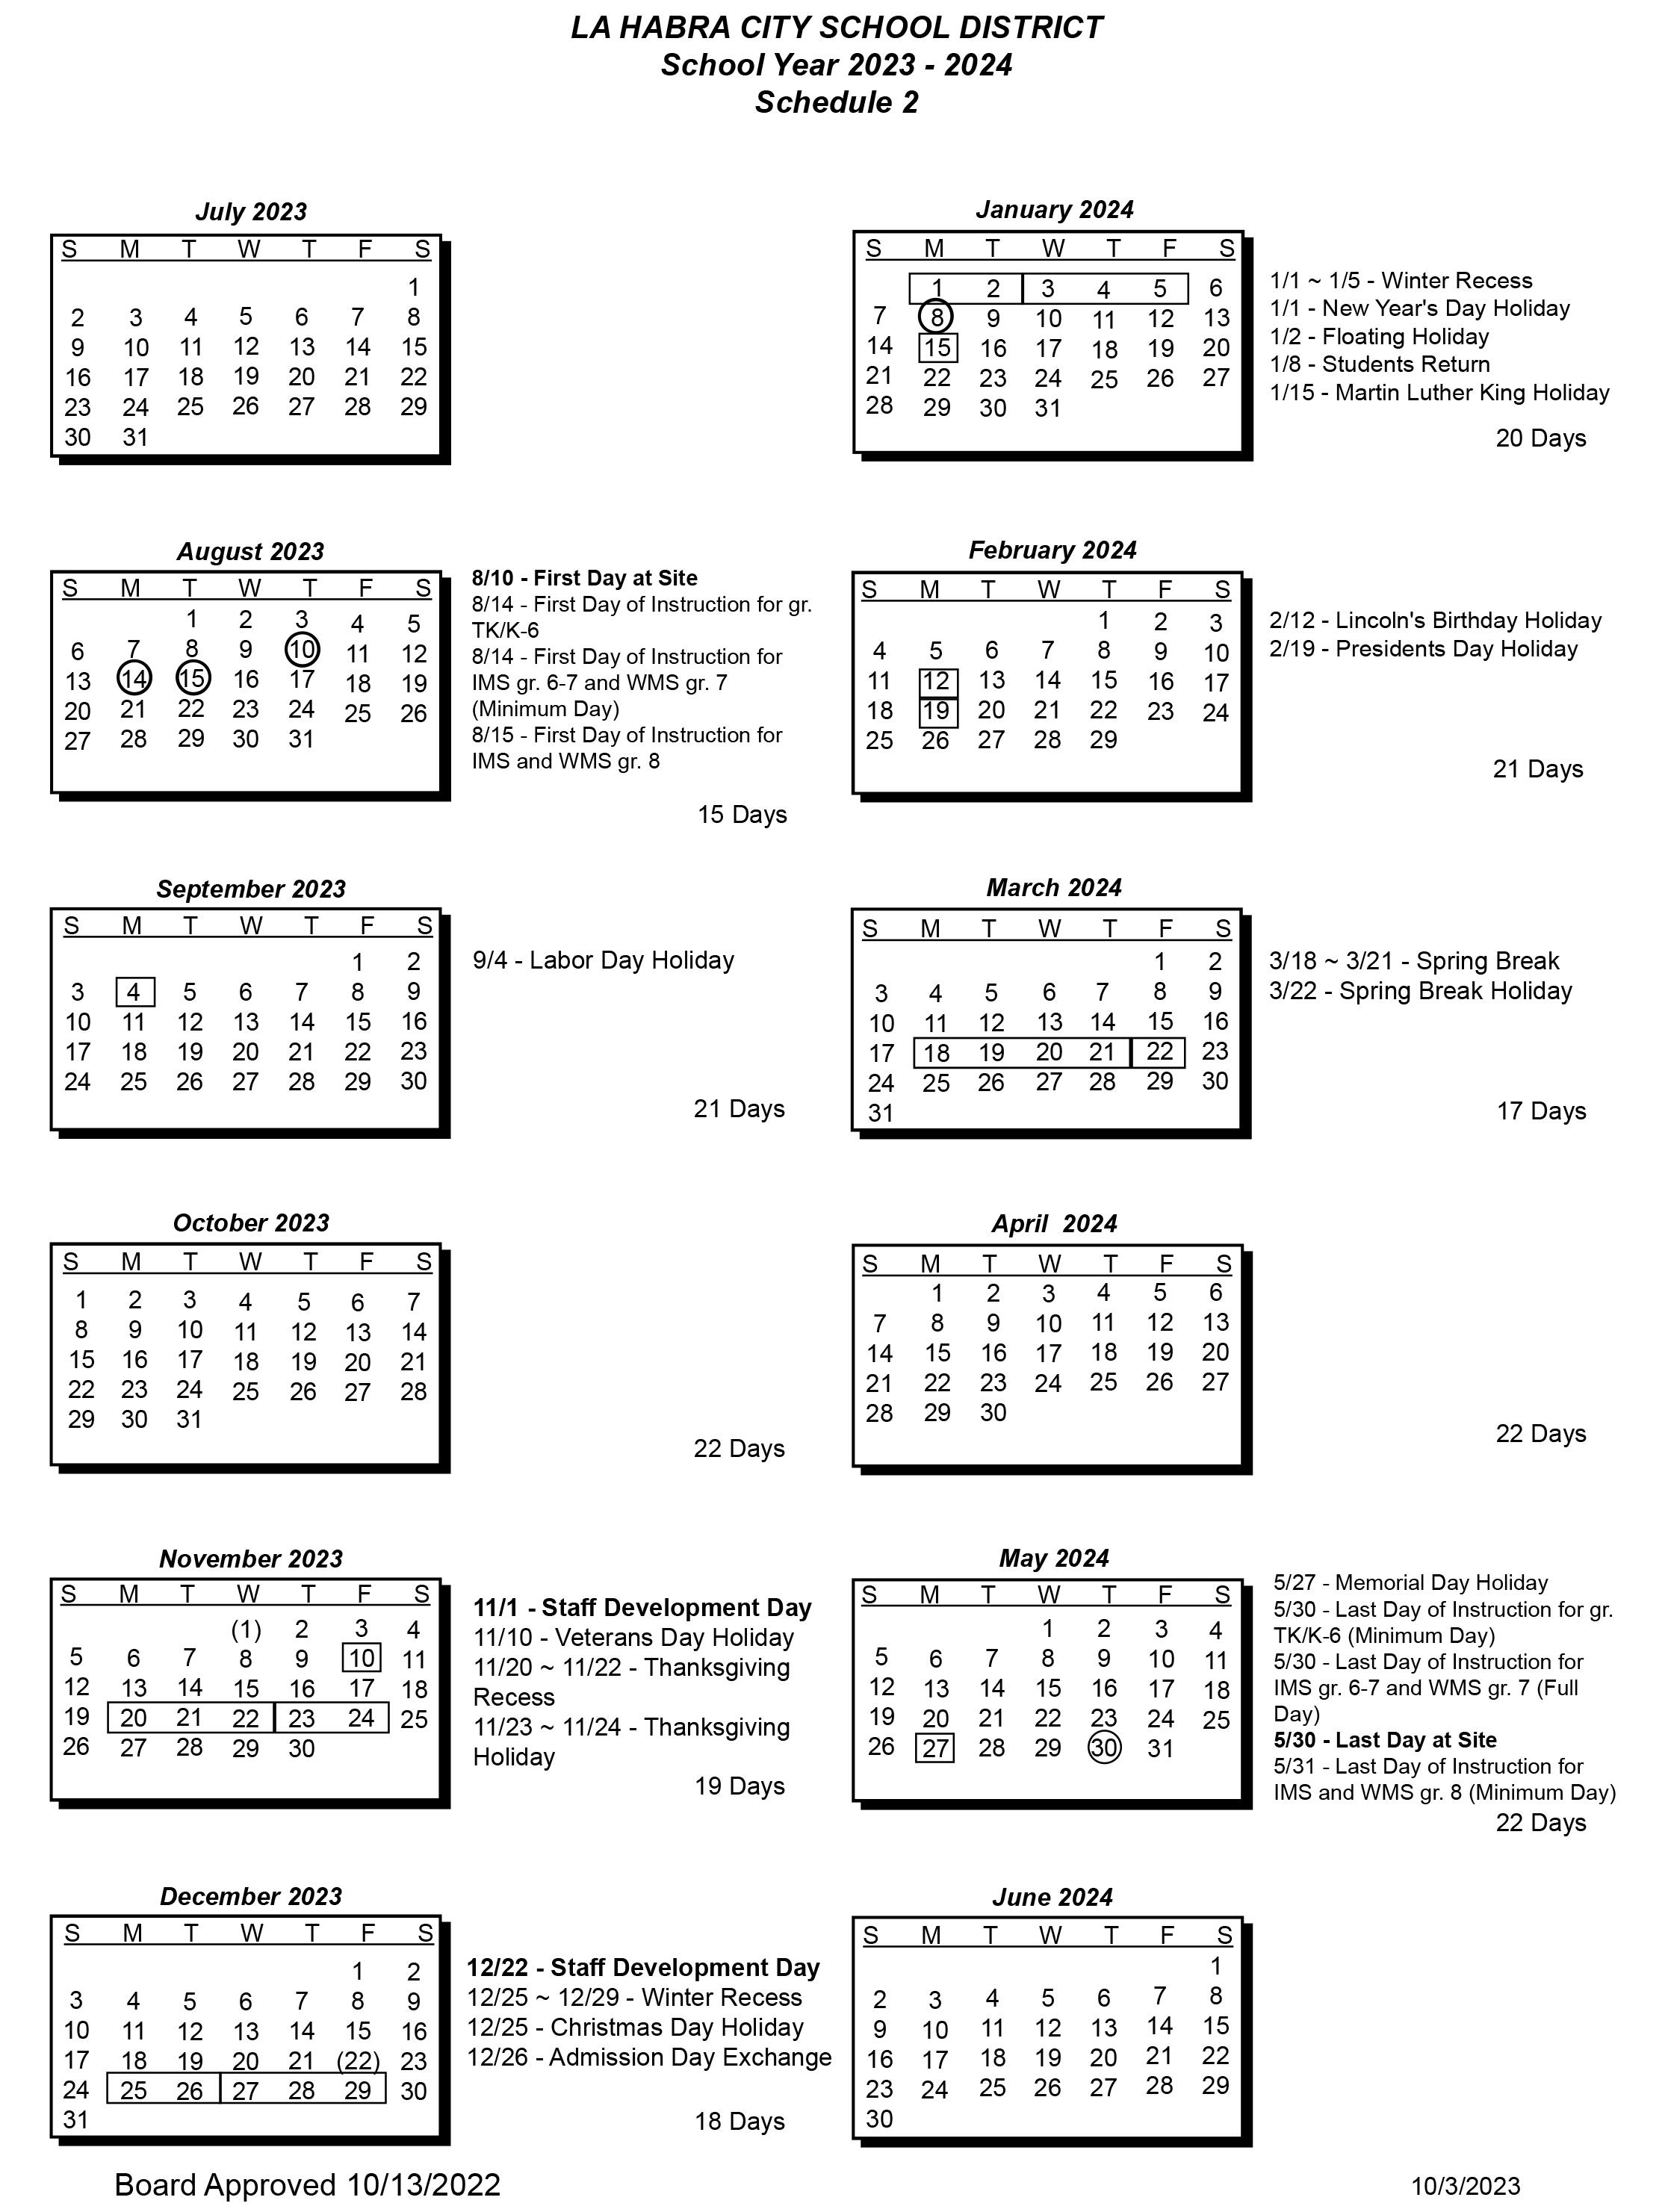 School Year Calendar Schedule 2